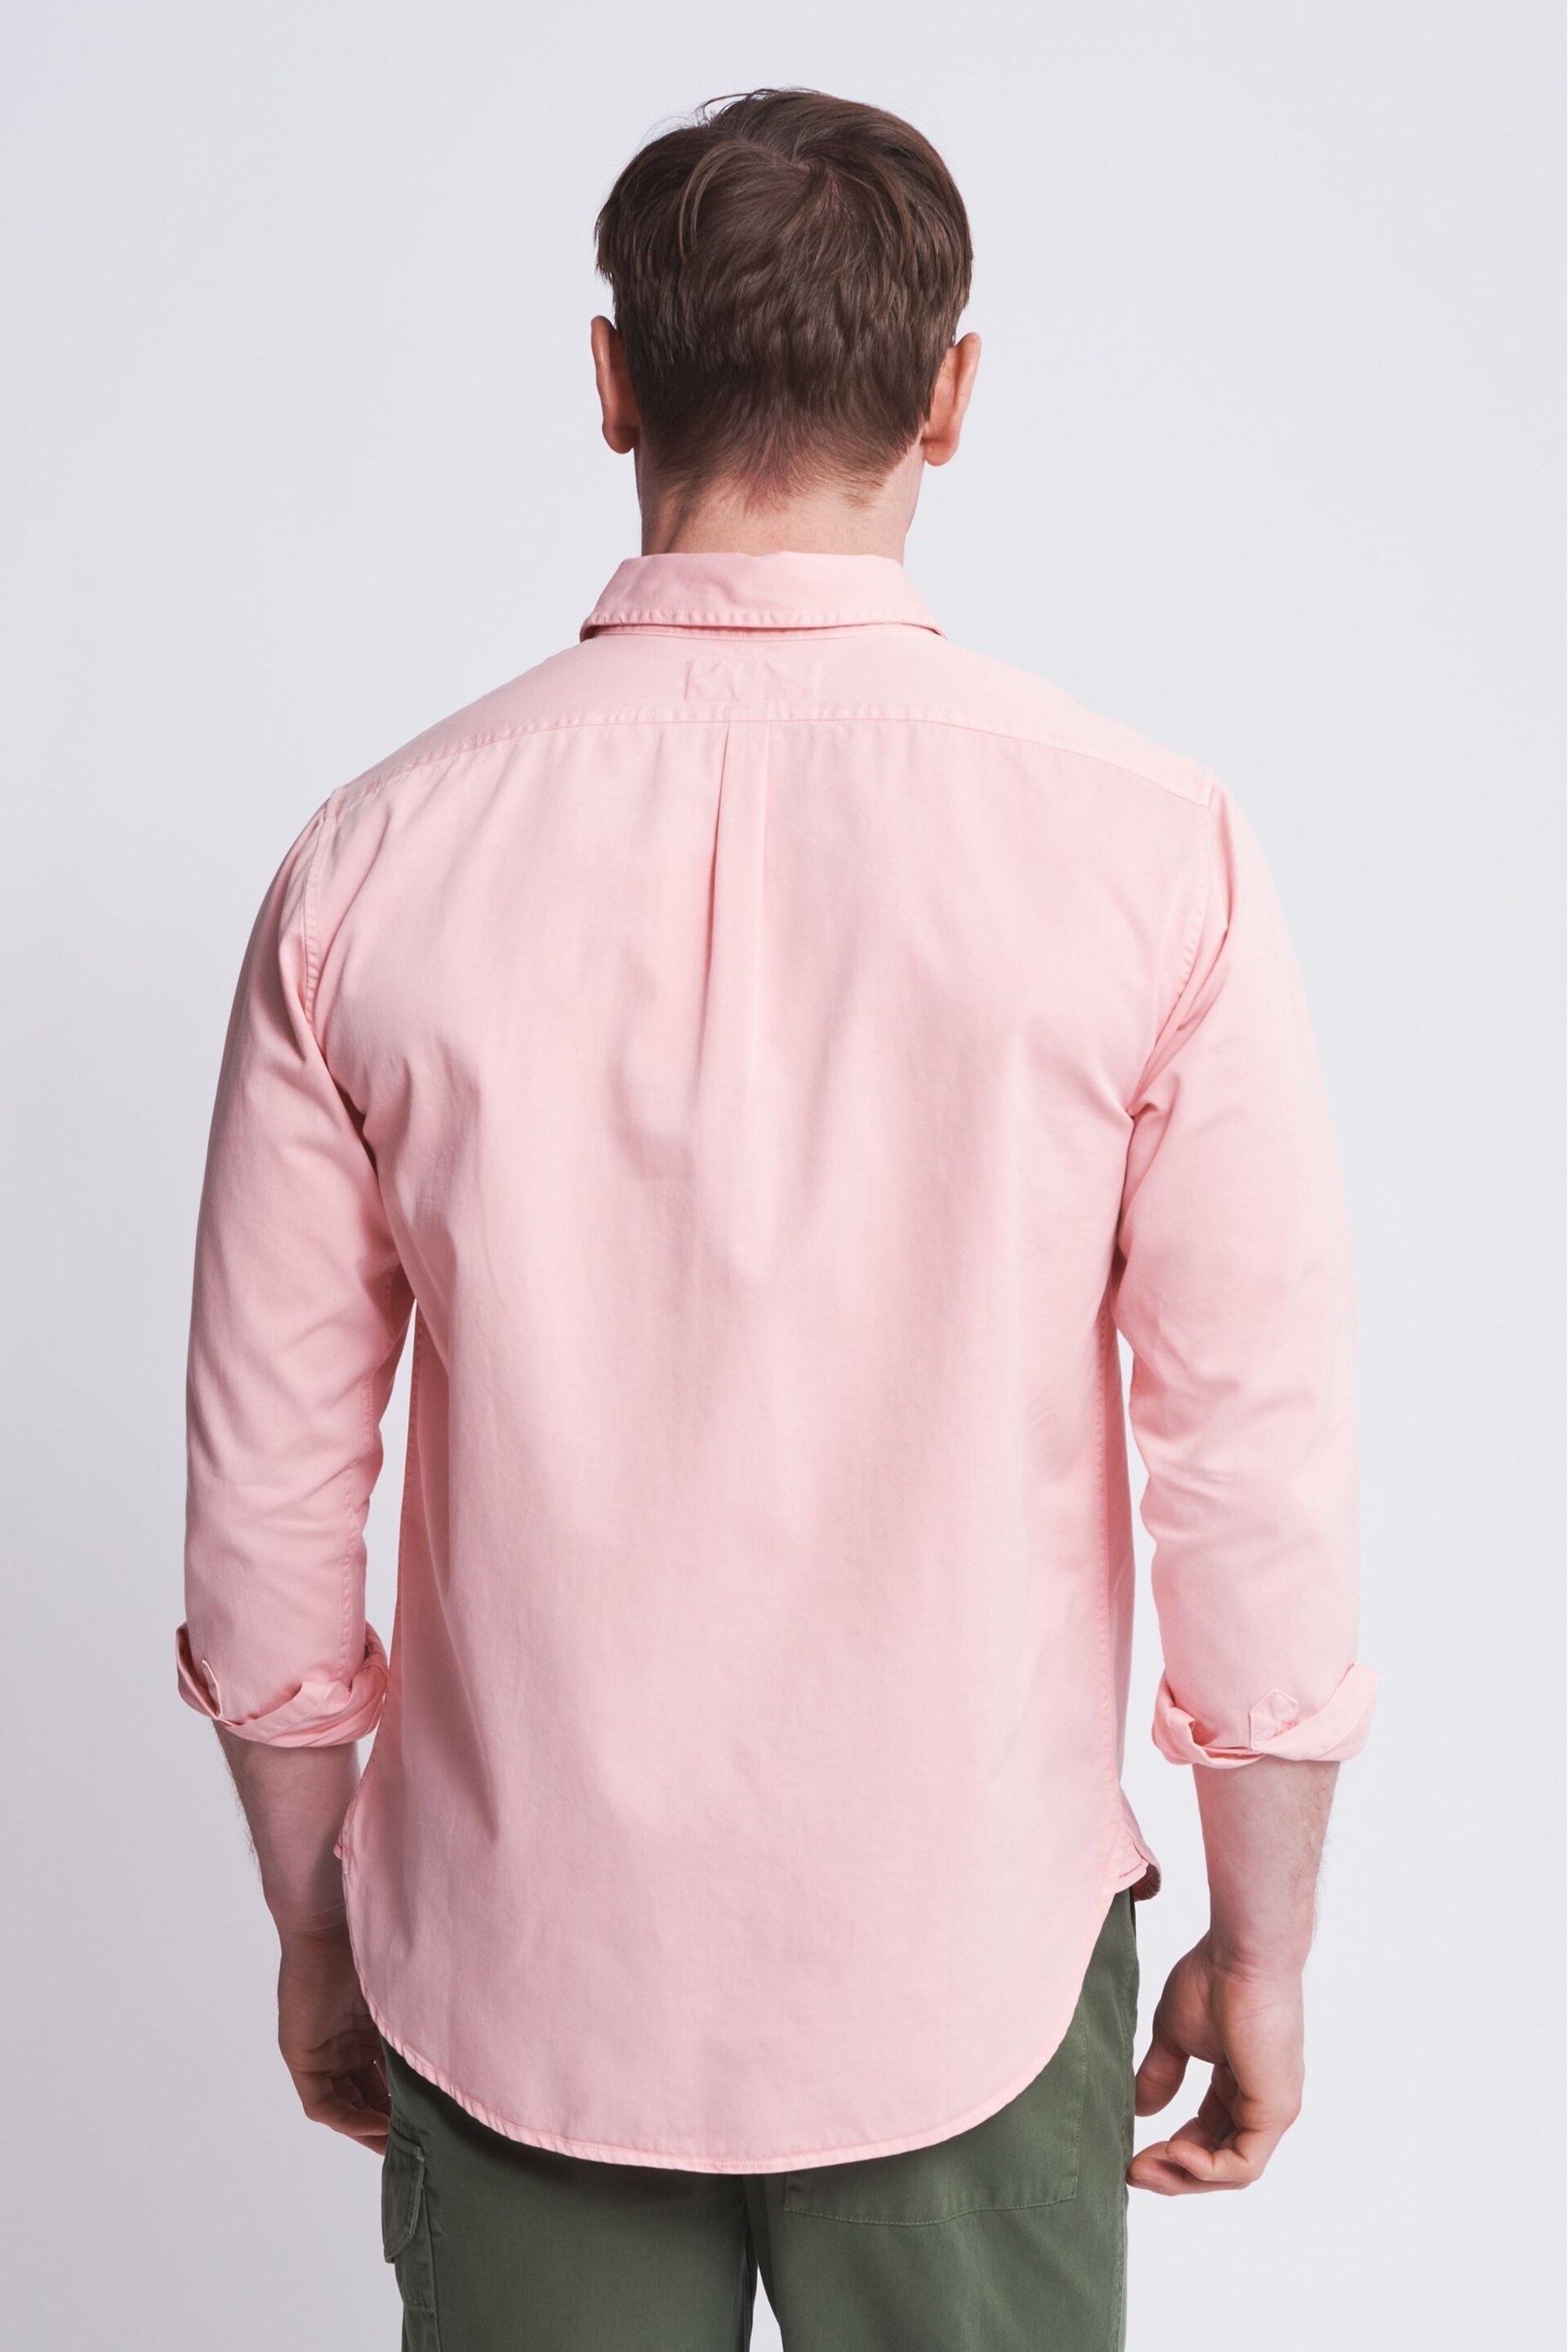 Aubin Hessle Garment Dyed Shirt - Image 2 of 7